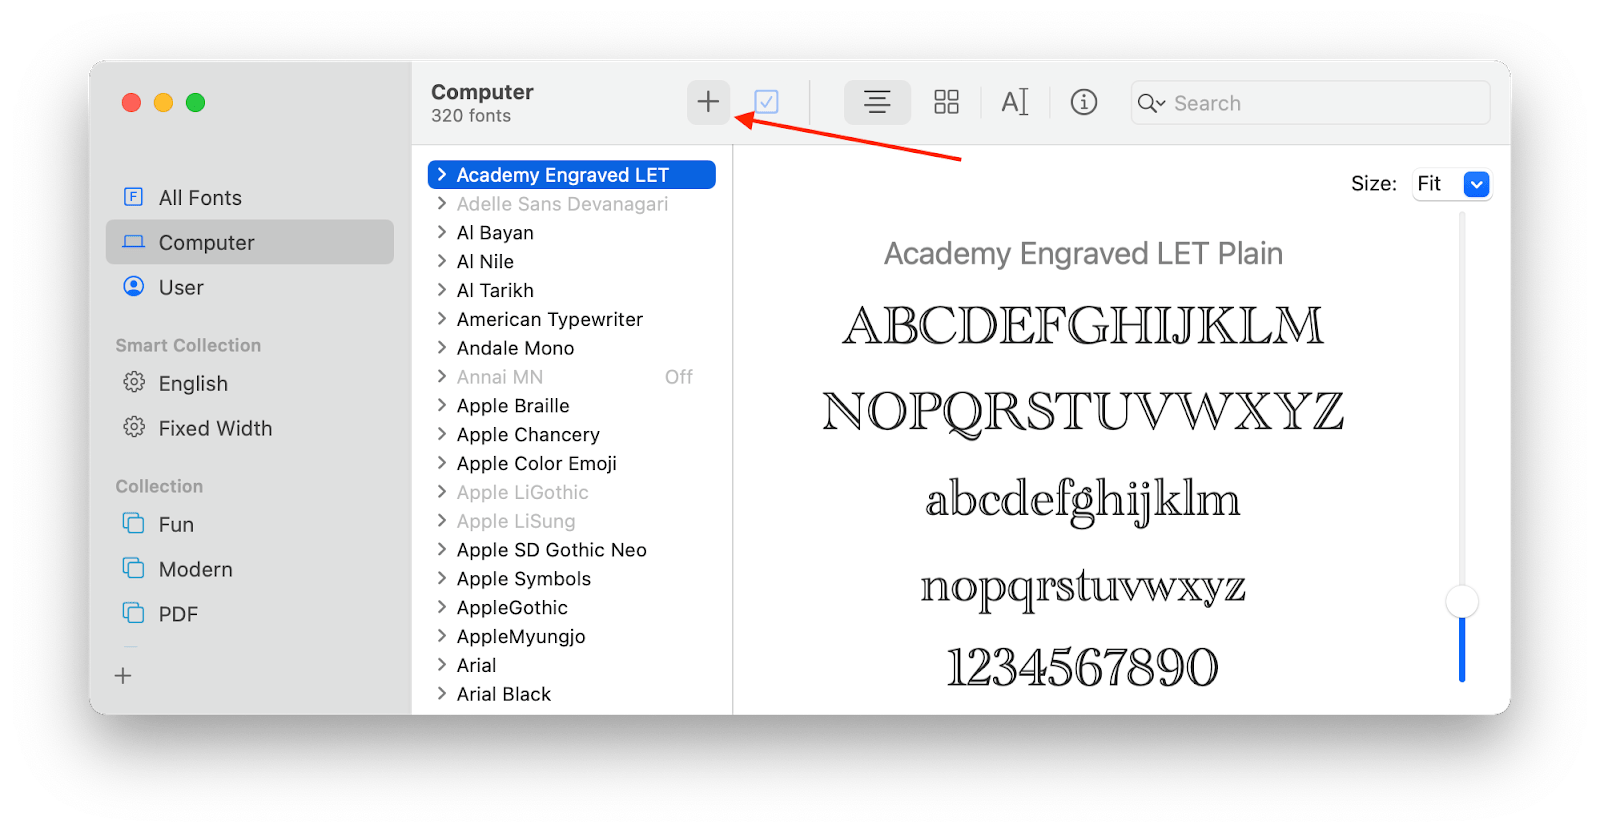 Add fonts on a Mac manually